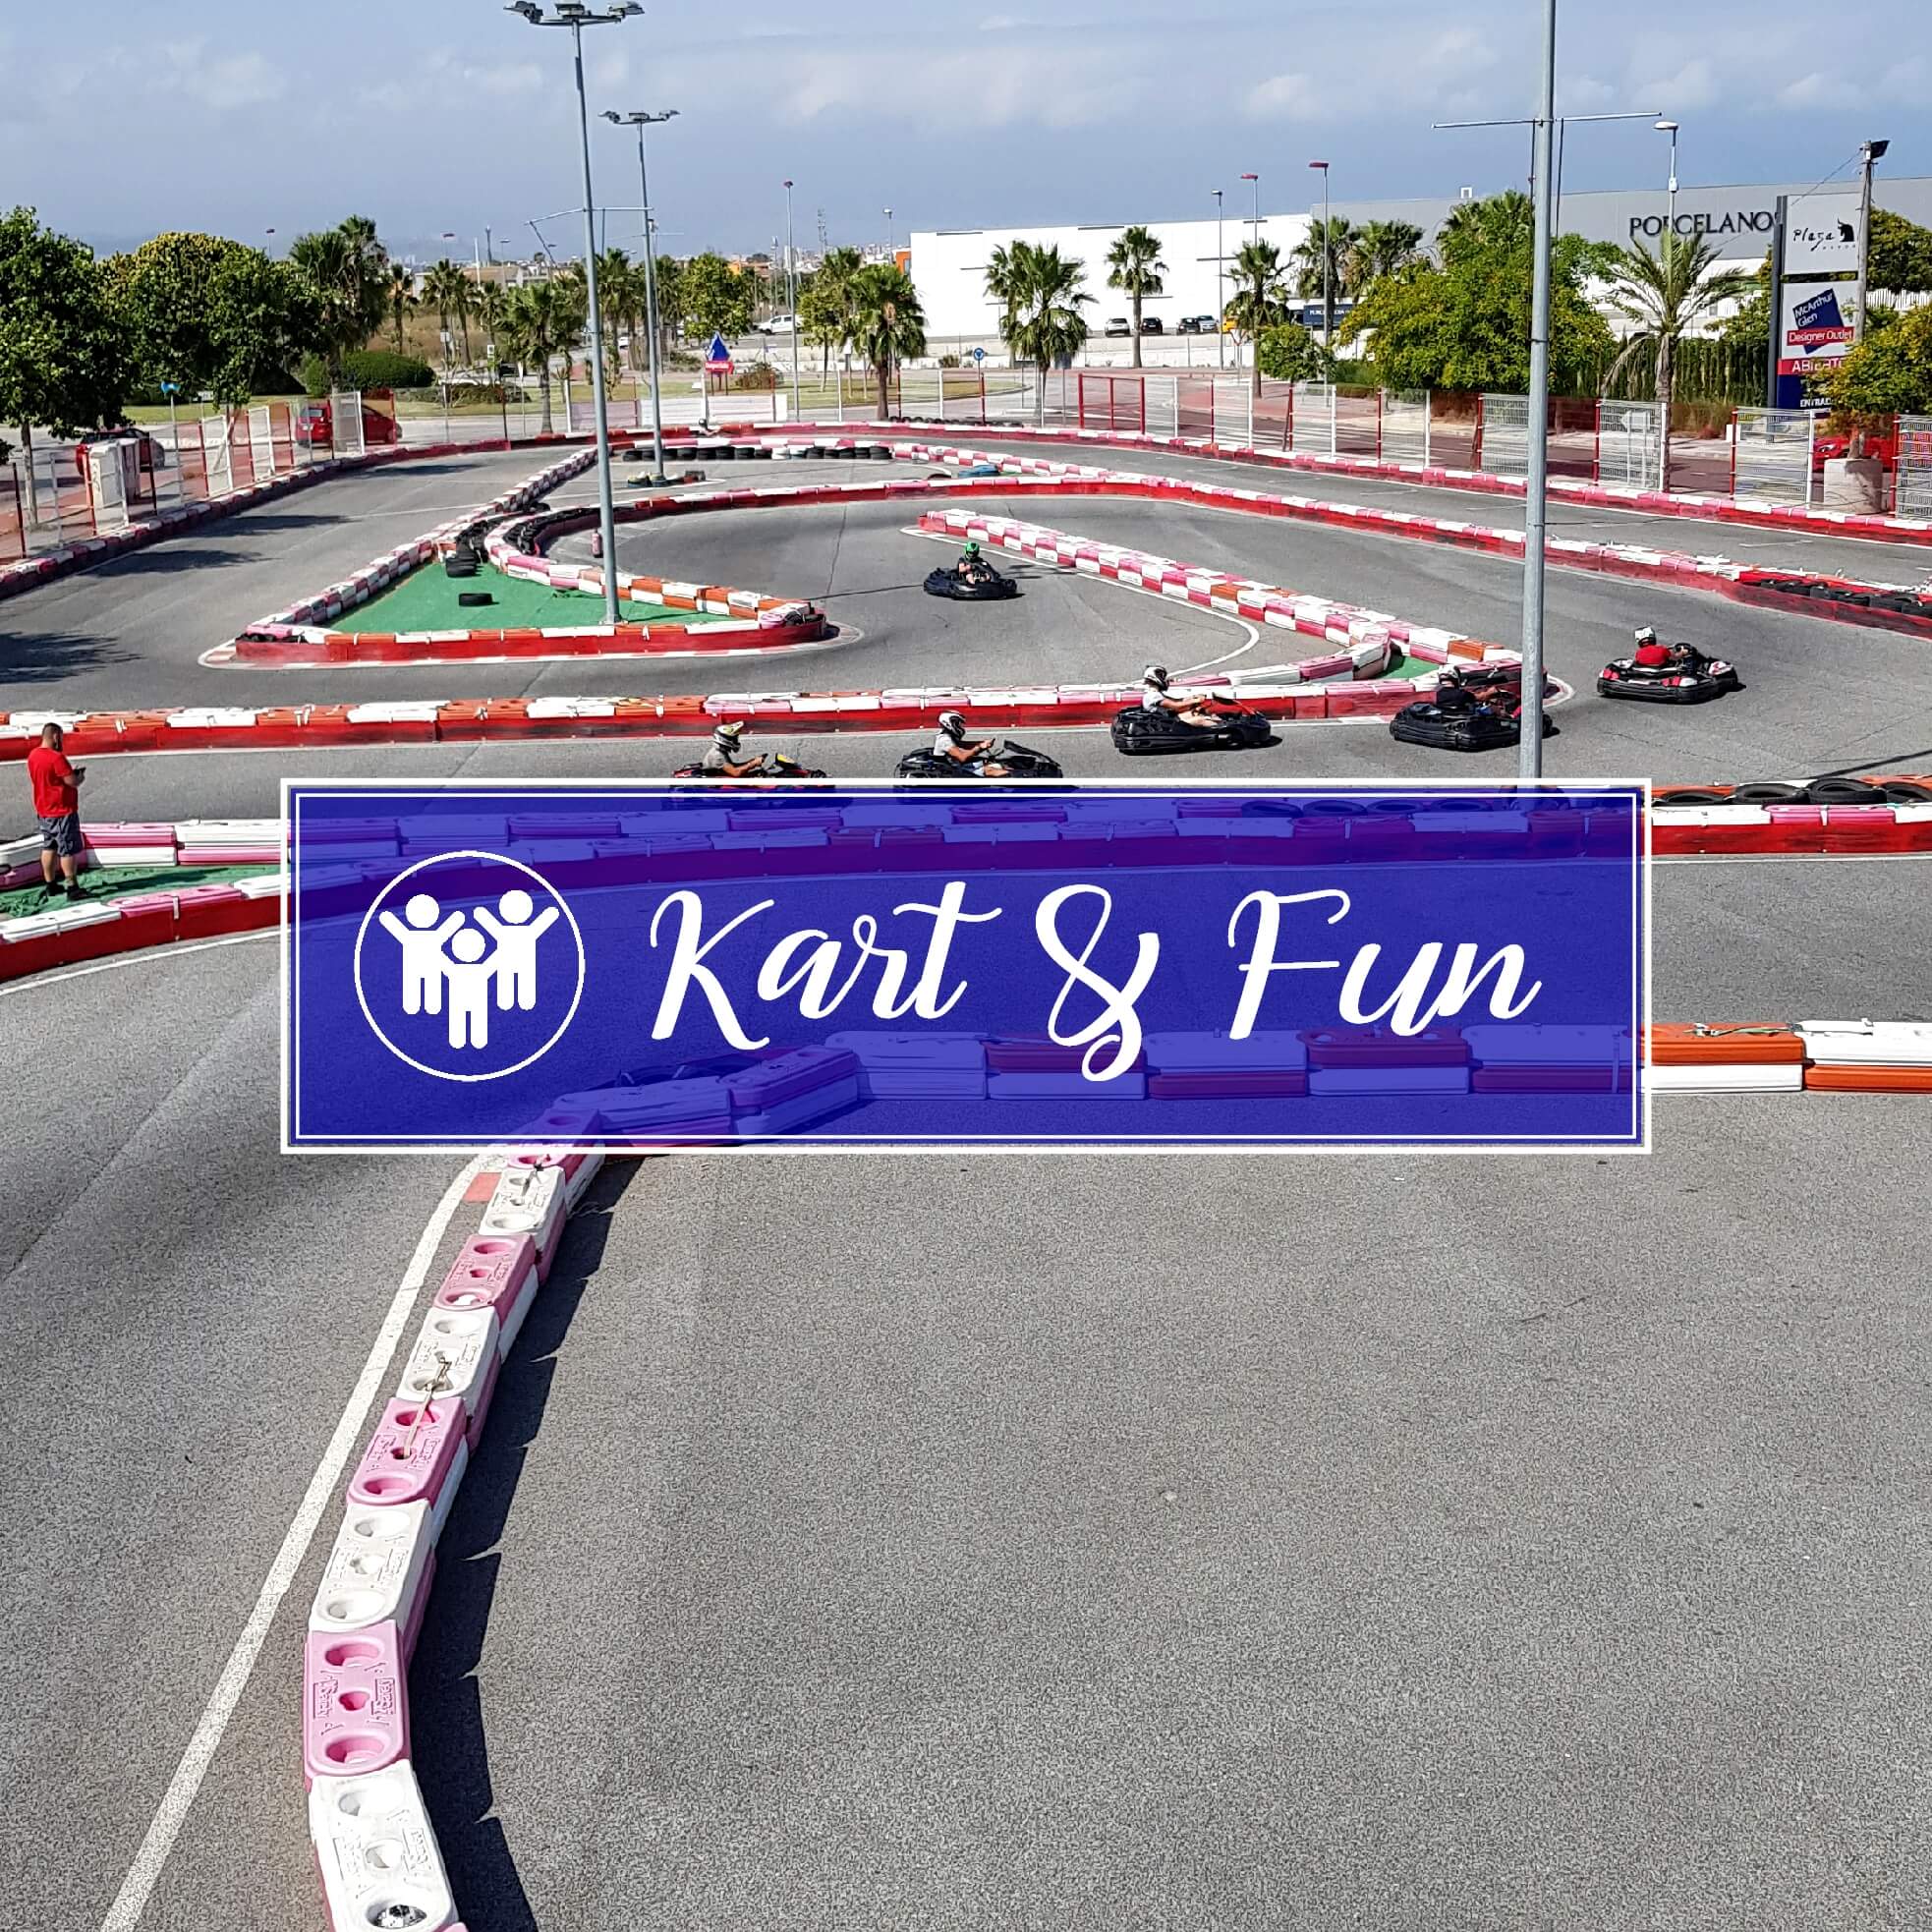 Karting Plaza Mayor Malaga Kart and Fun